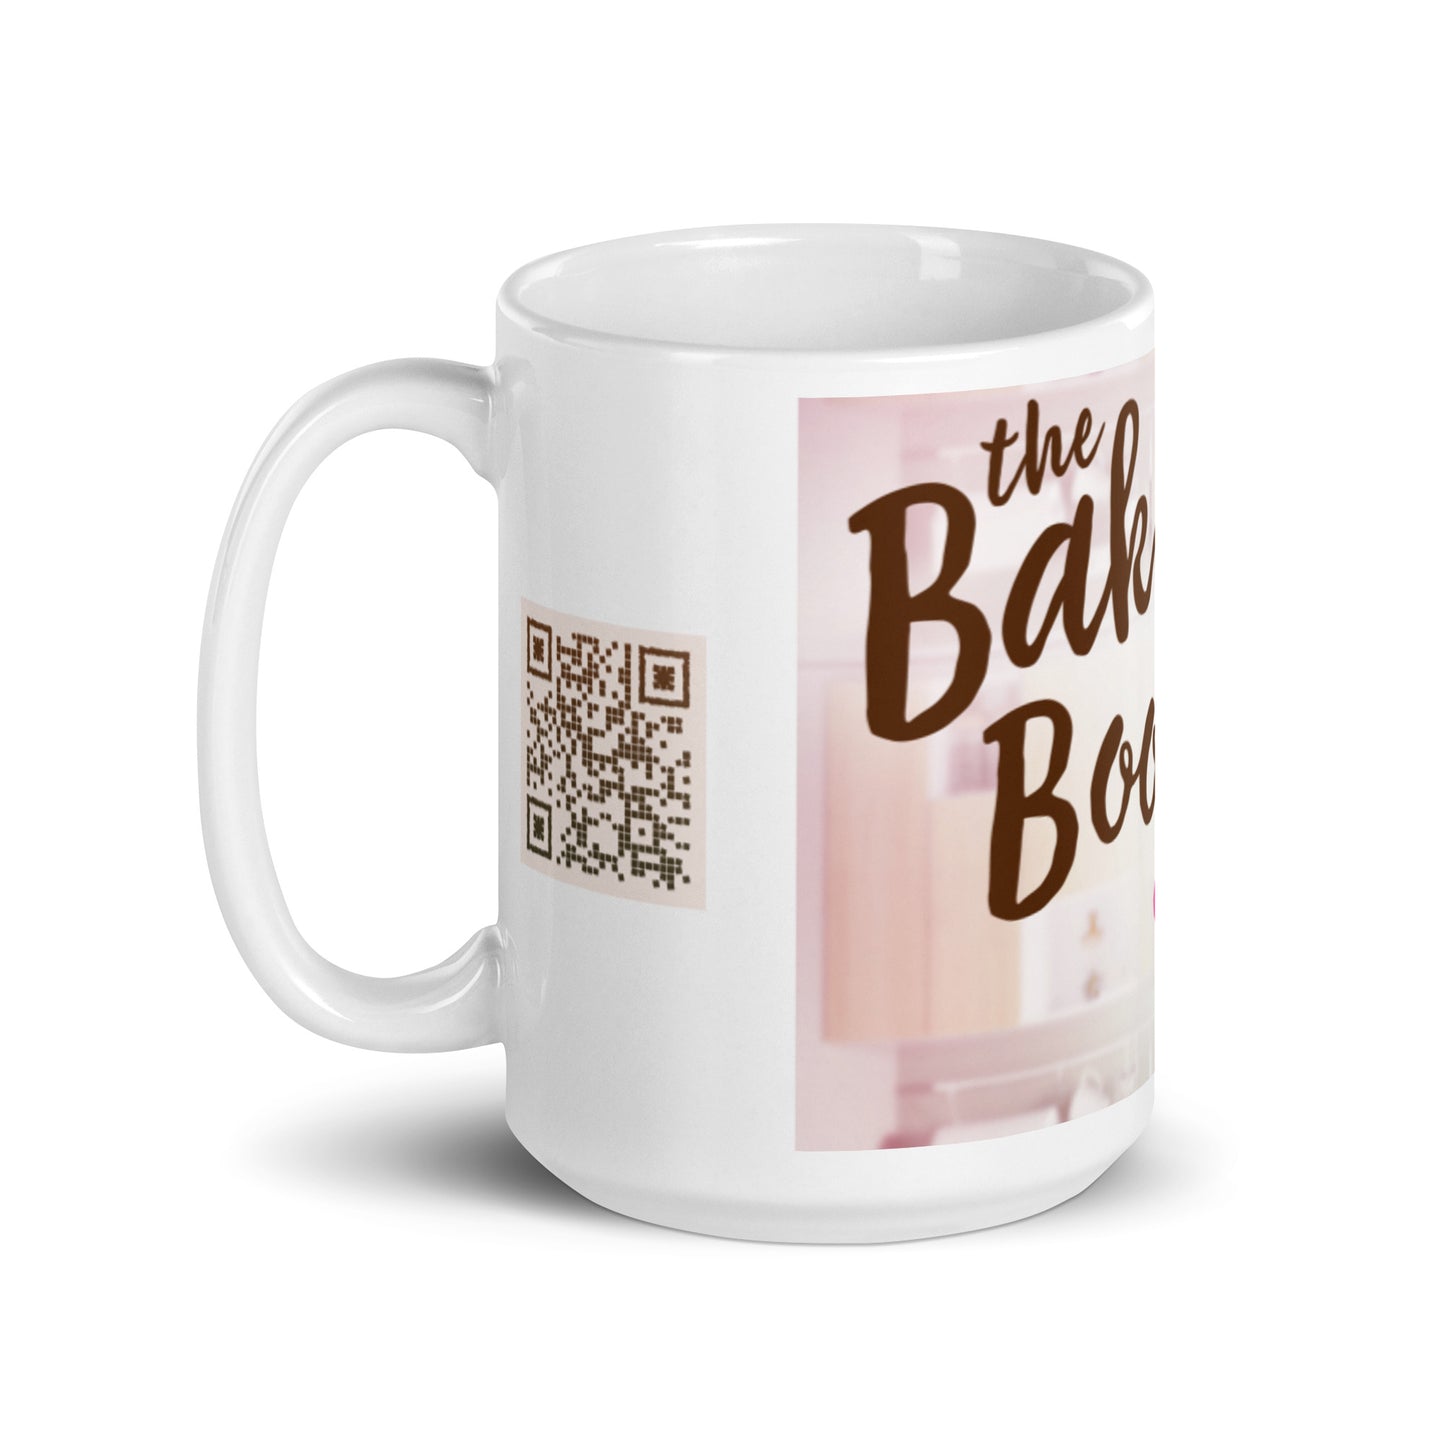 The Bakery Booking - White Coffee Mug